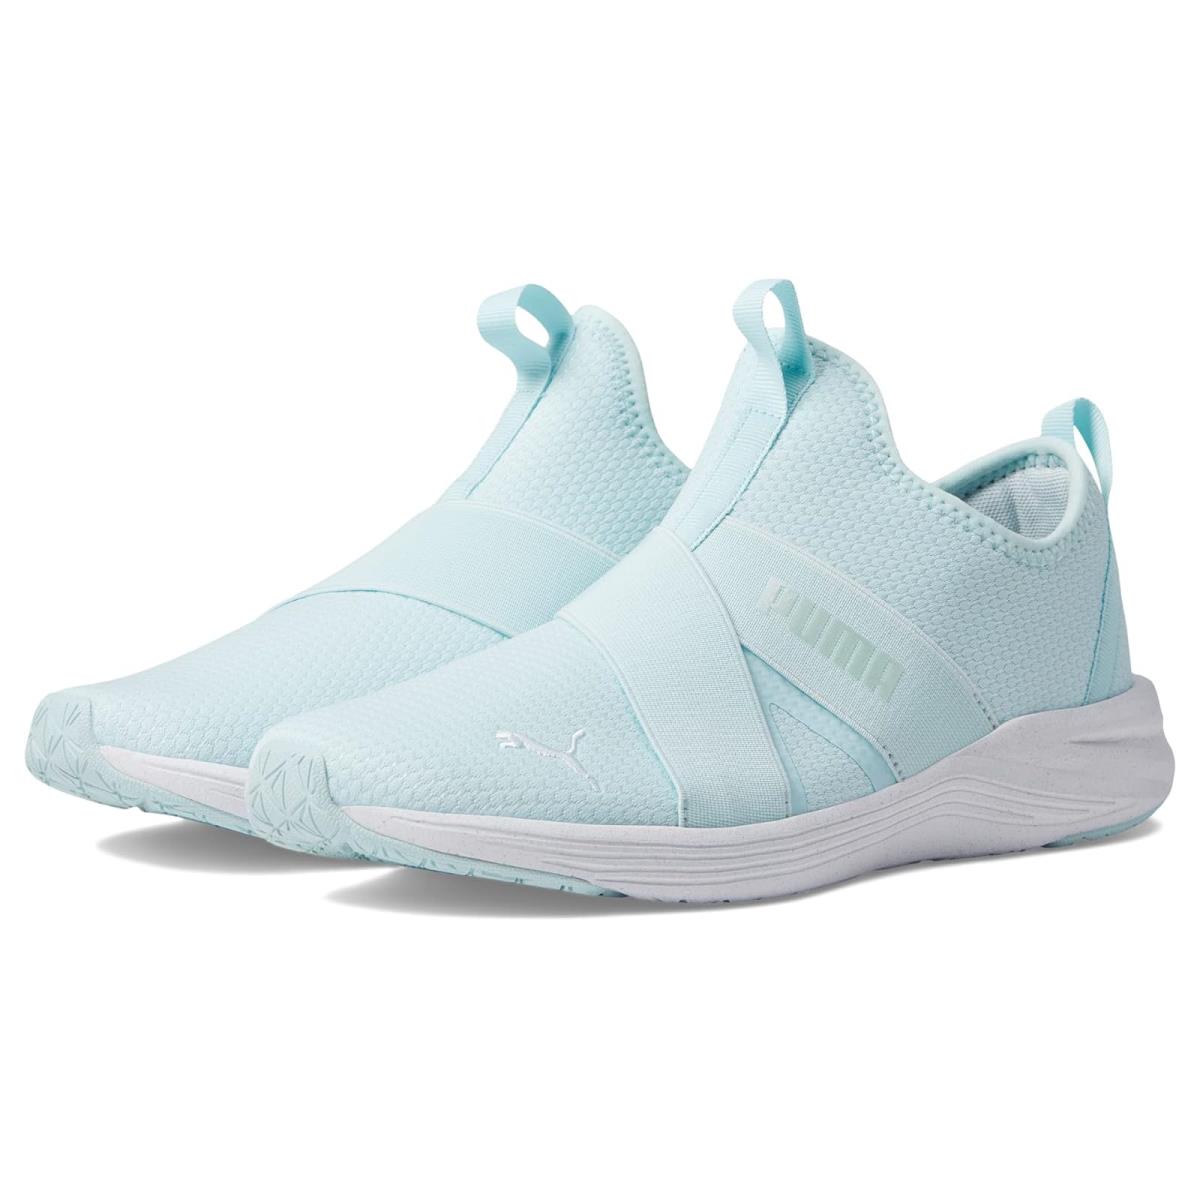 Woman`s Sneakers Athletic Shoes Puma Better Foam Prowl Slip Crystalline Nitro Blue/Puma White